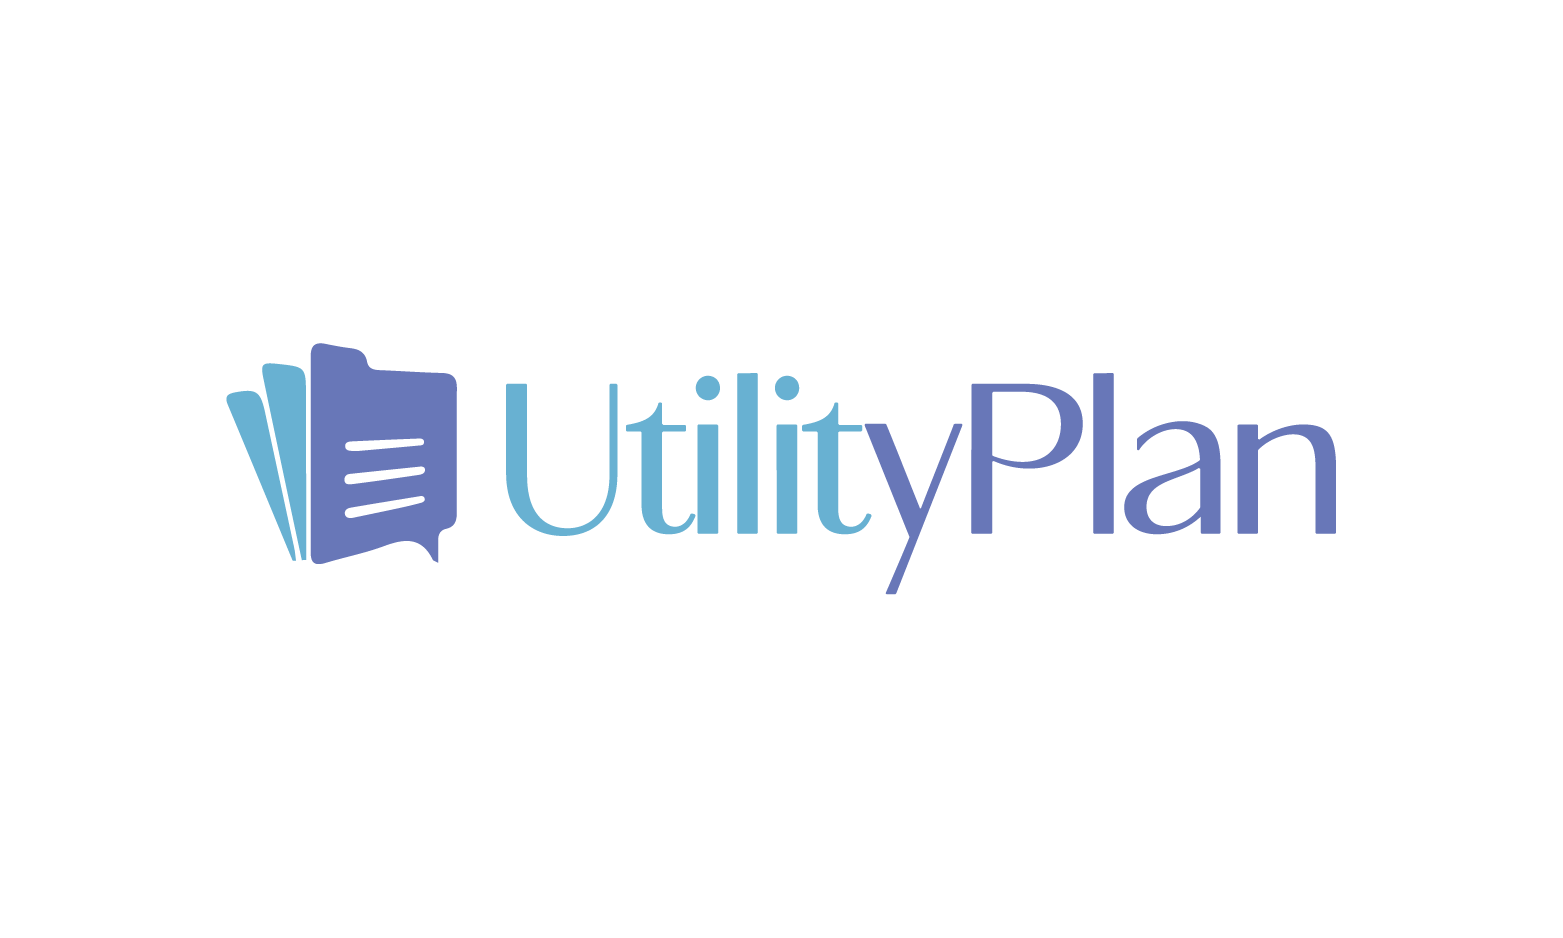 UtilityPlan.com - Creative brandable domain for sale